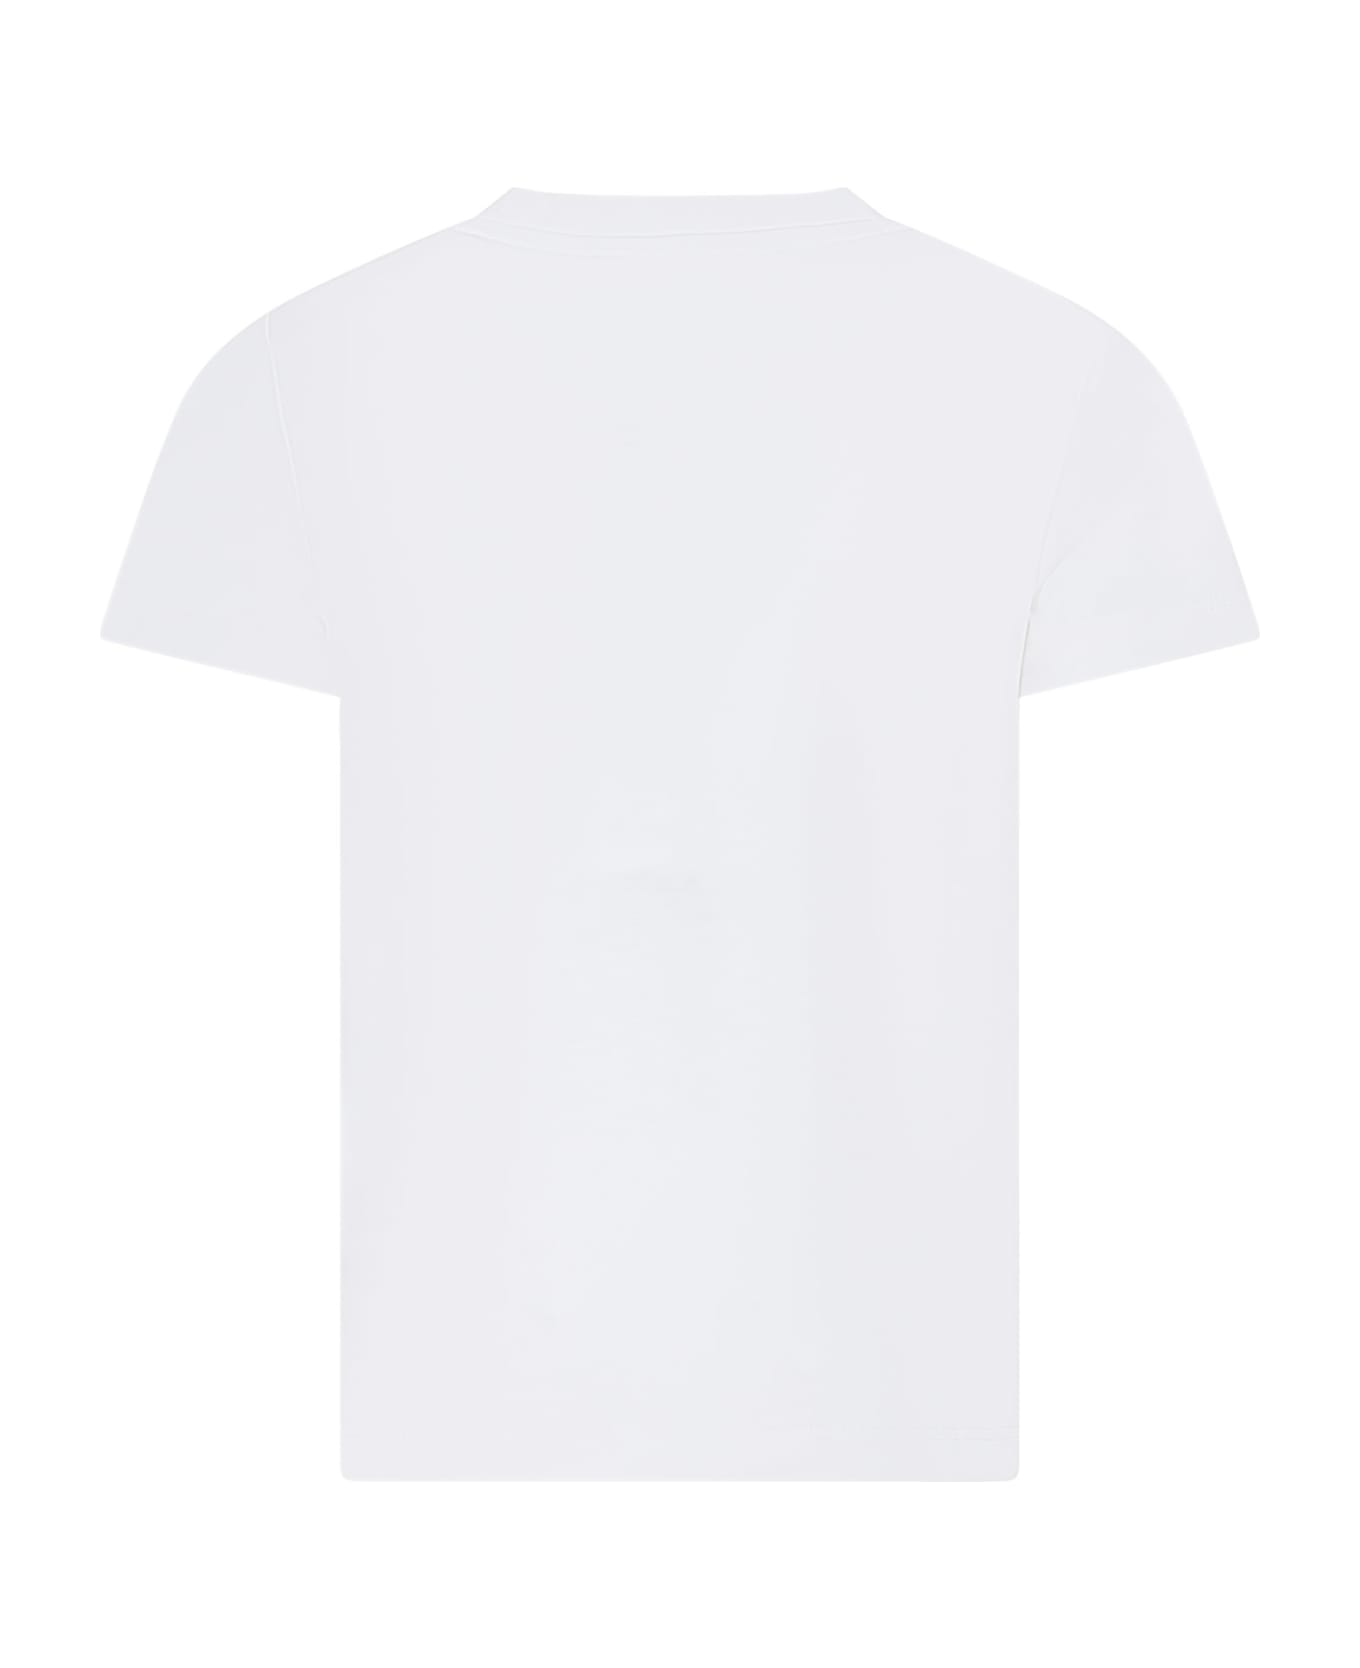 Versace White T-shirt For Girl With Medusa Print - White